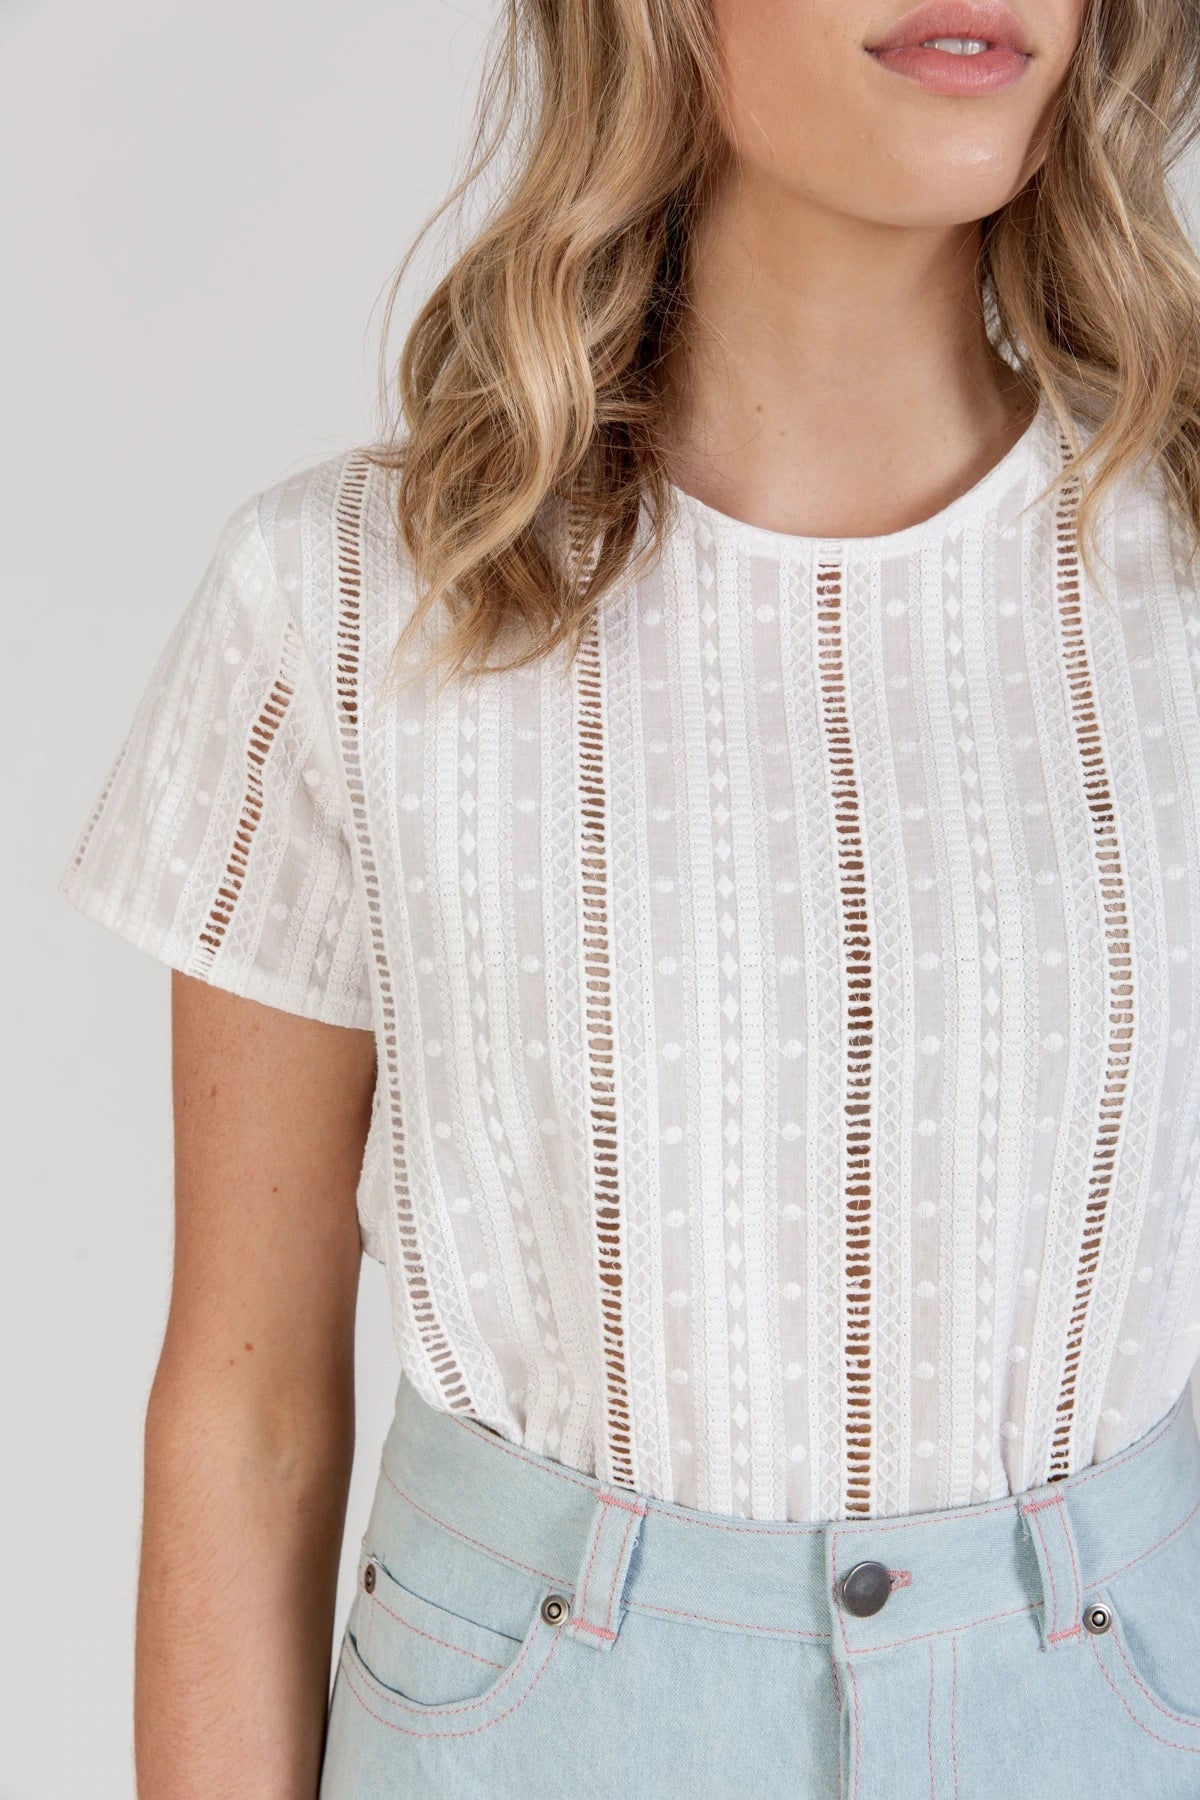 Megan Nielsen - Sudley Dress & Blouse Sewing Pattern